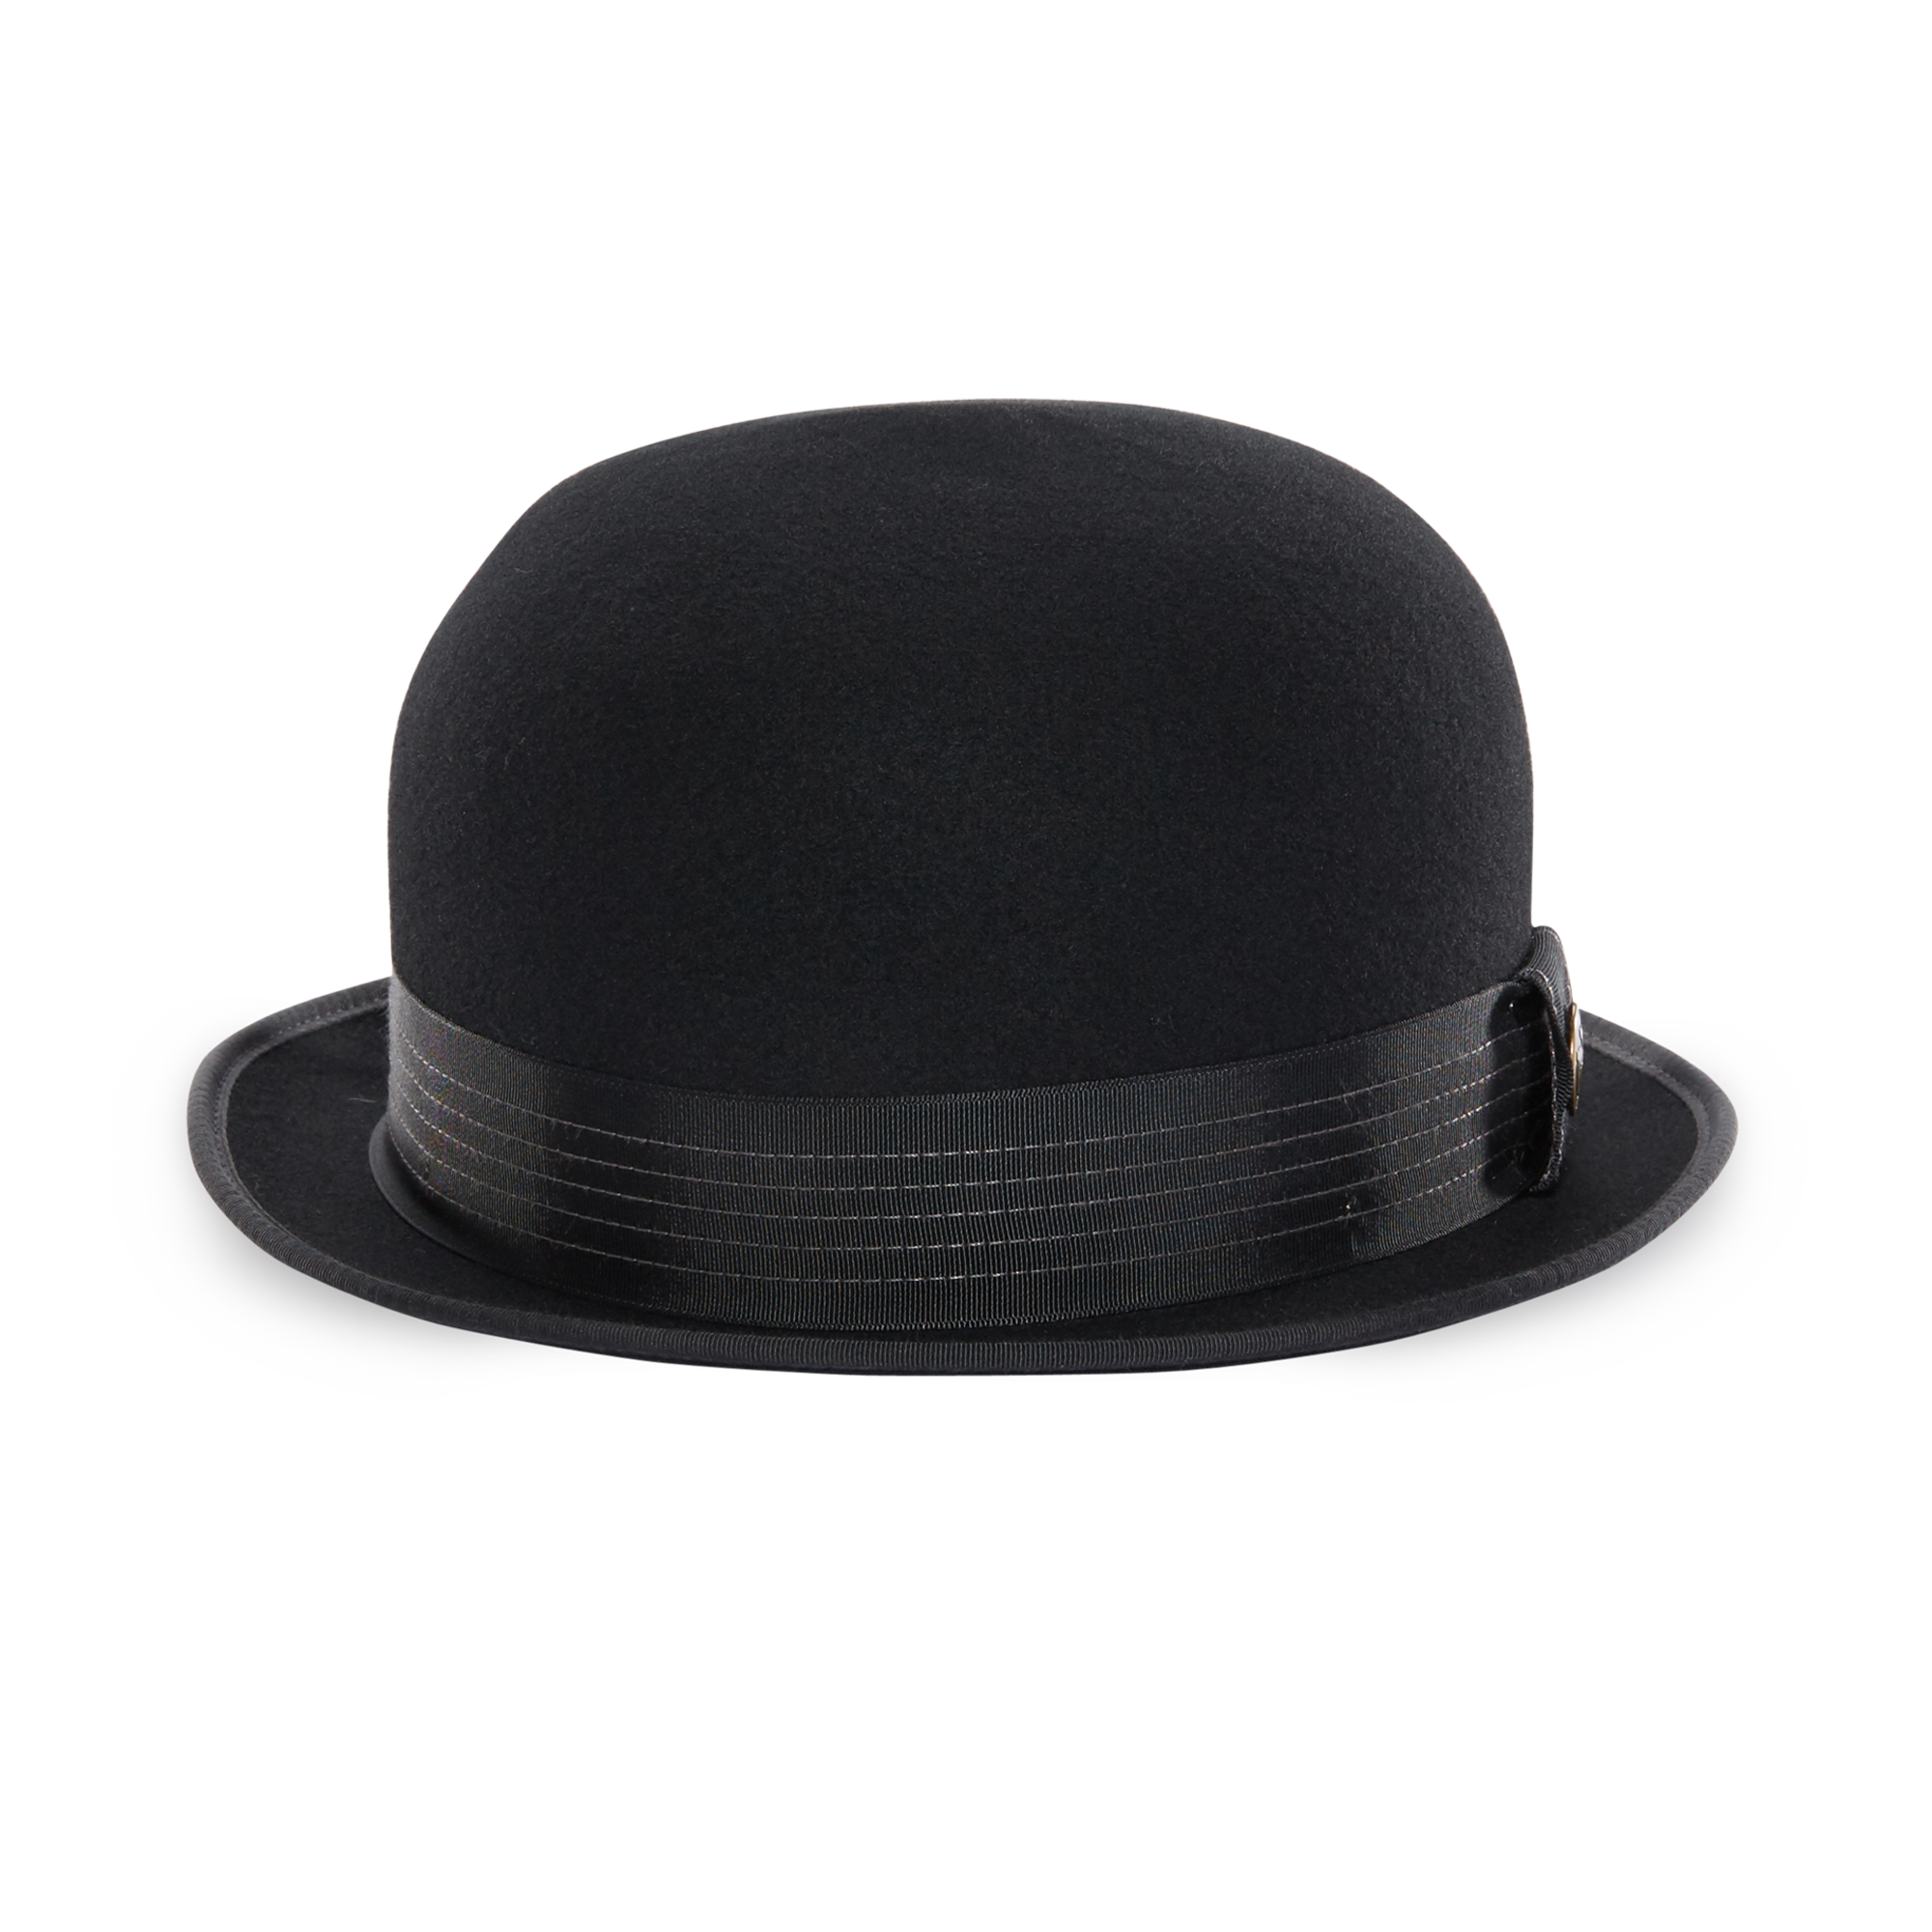 Bowler hat. Шляпа Чарли Чаплина. Шляпа котелок Чарли Чаплина. Чарли Чаплин в шляпе. Charlie Chaplin шляпа.